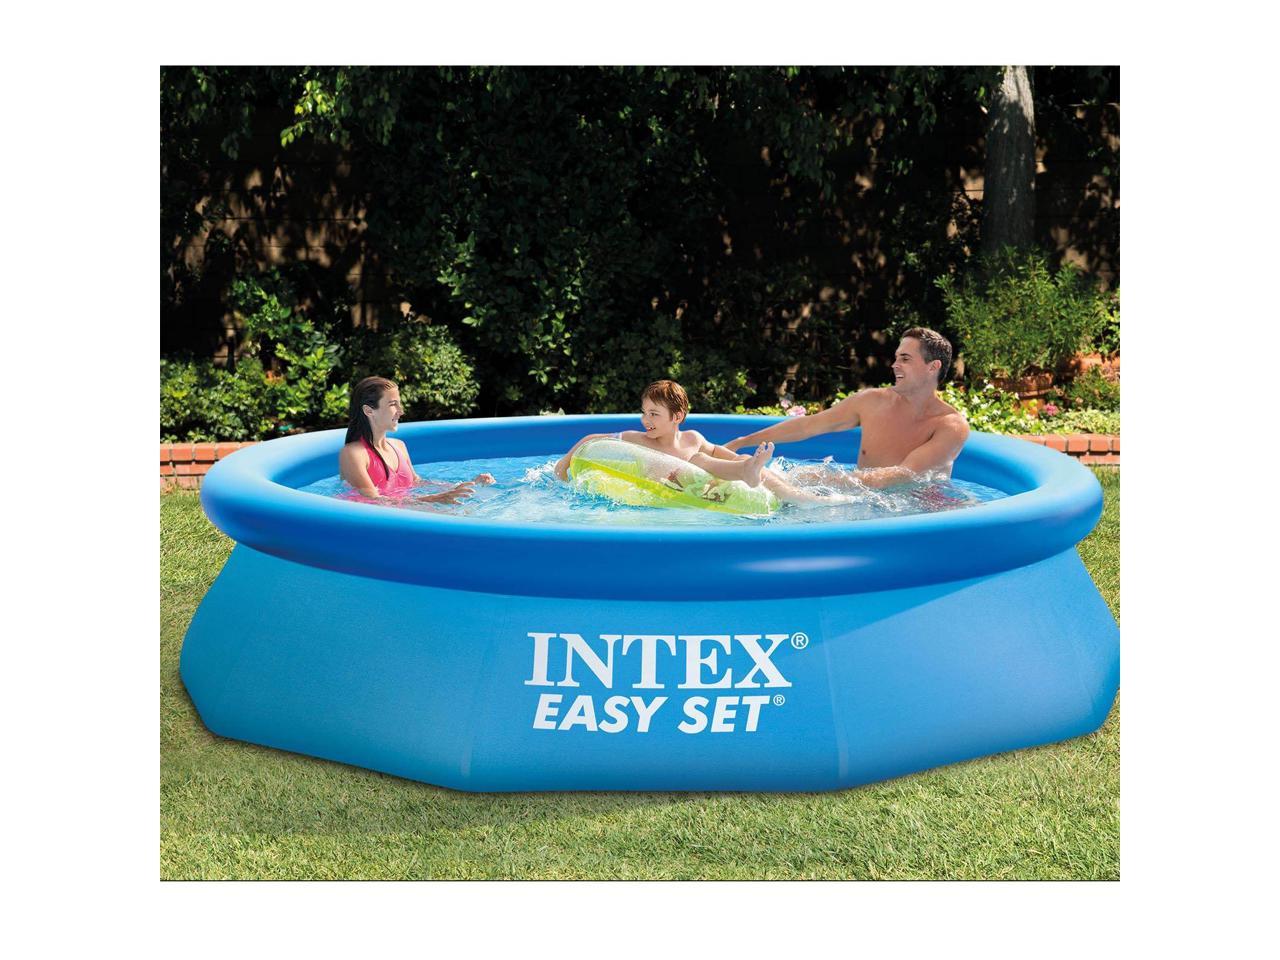 How To Set Up Intex Easy Set Pool Pump